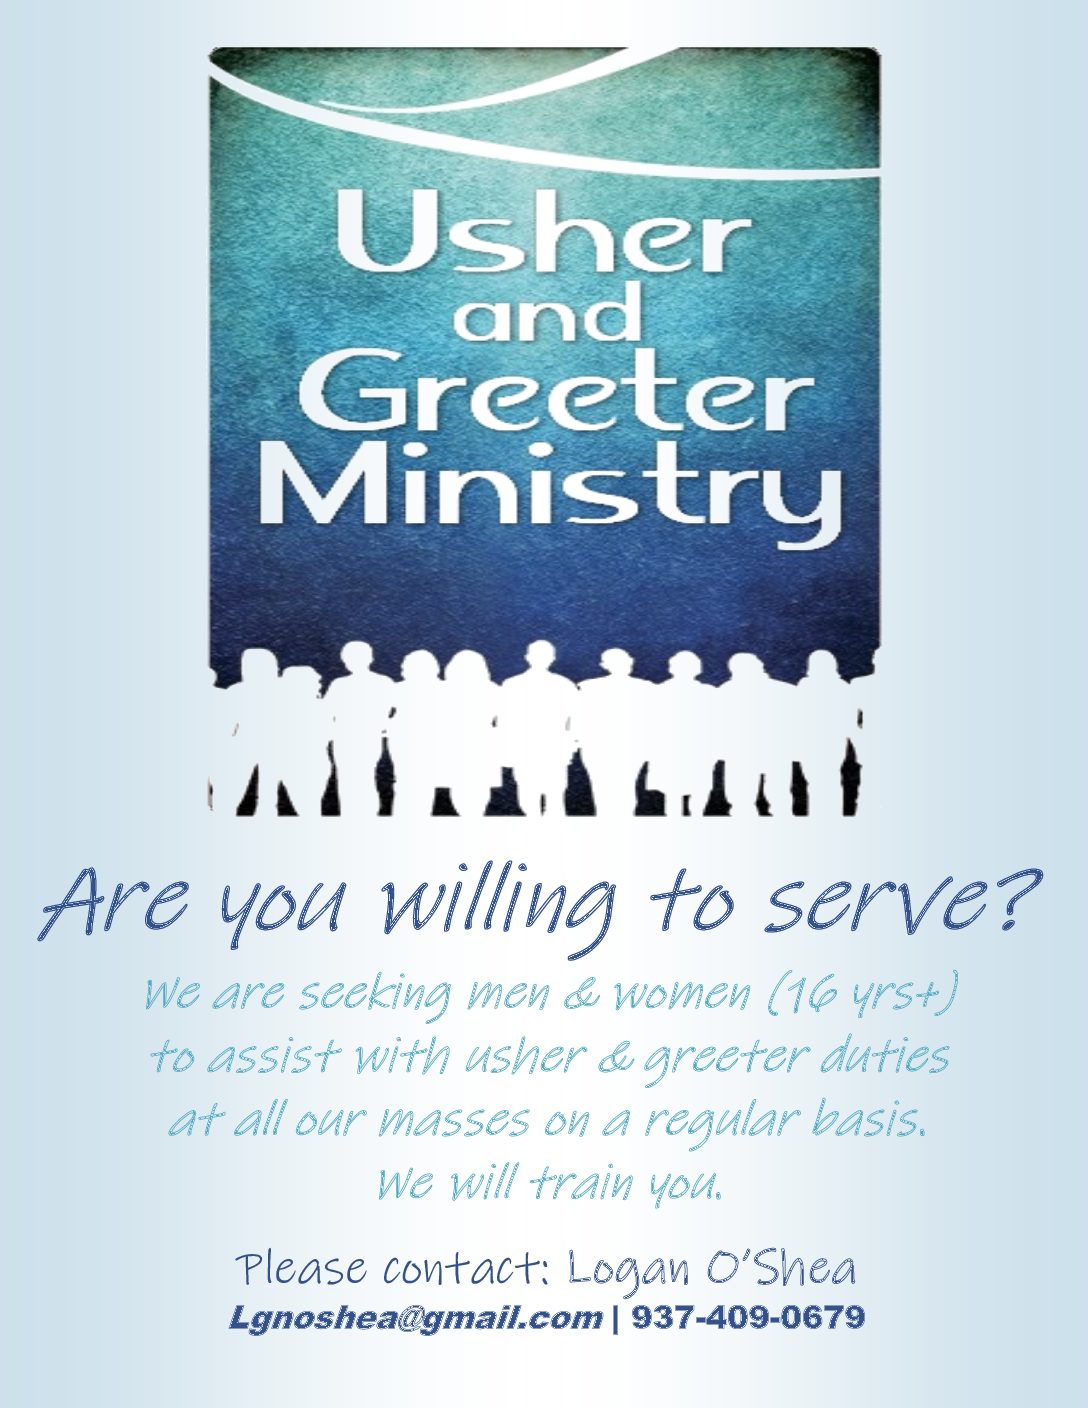 church ushers manual